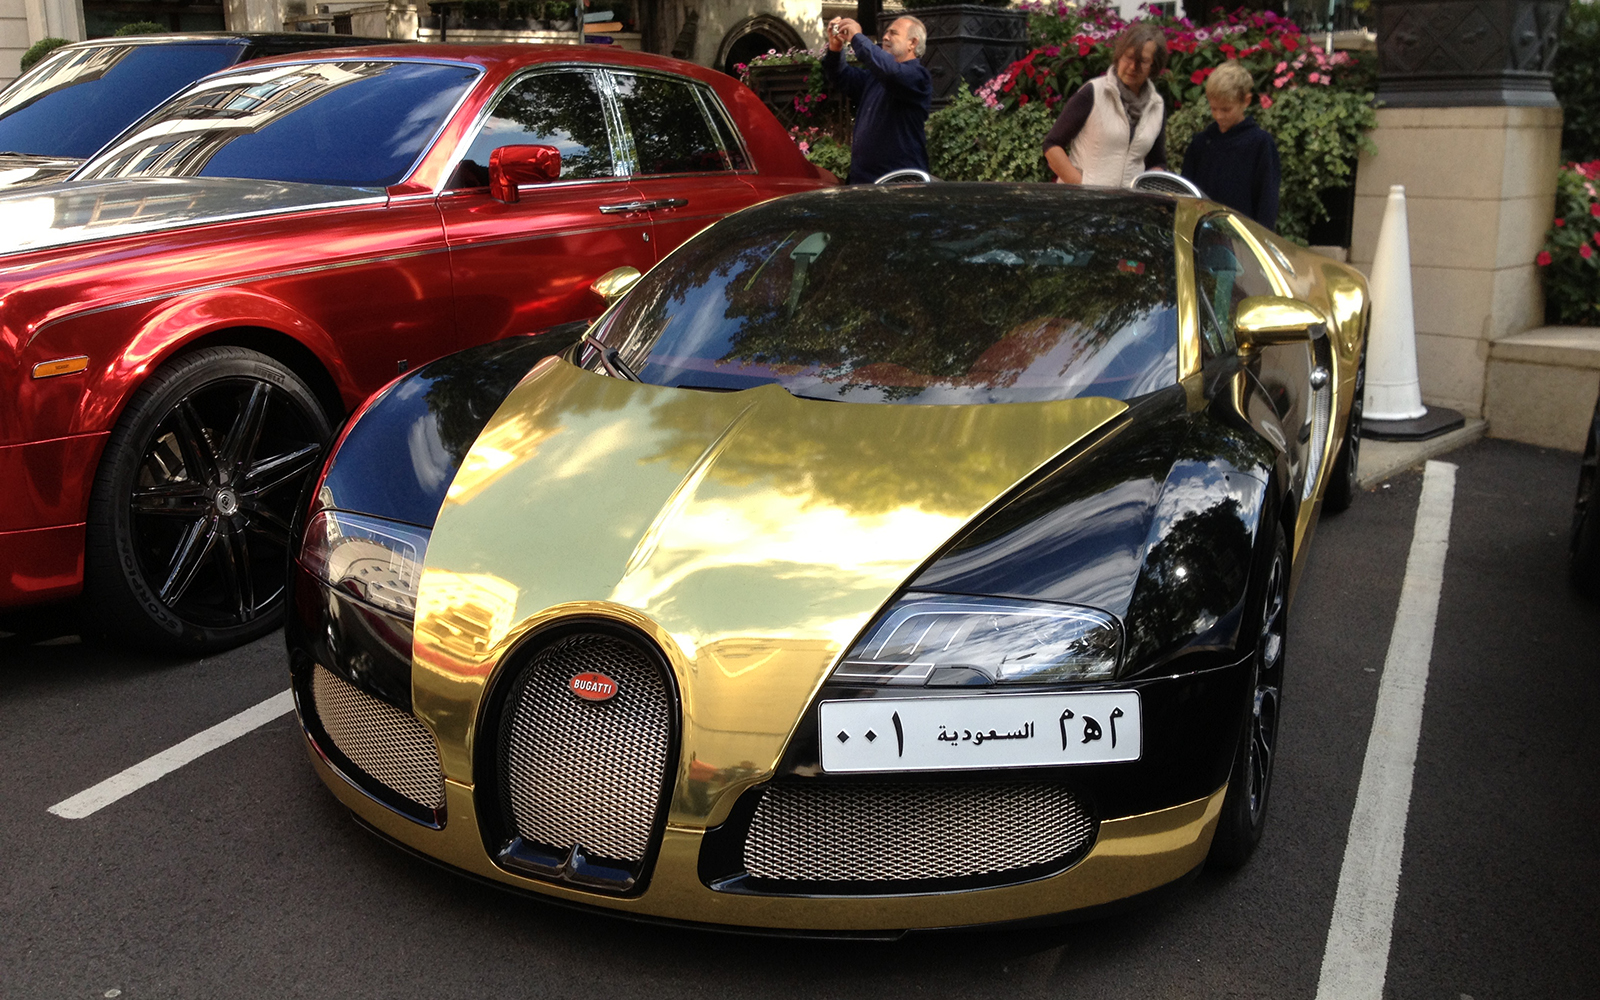 Bugatti in Park Lane near iconic 5 Star Luxury Hotel Mayfair London - The Dorchester